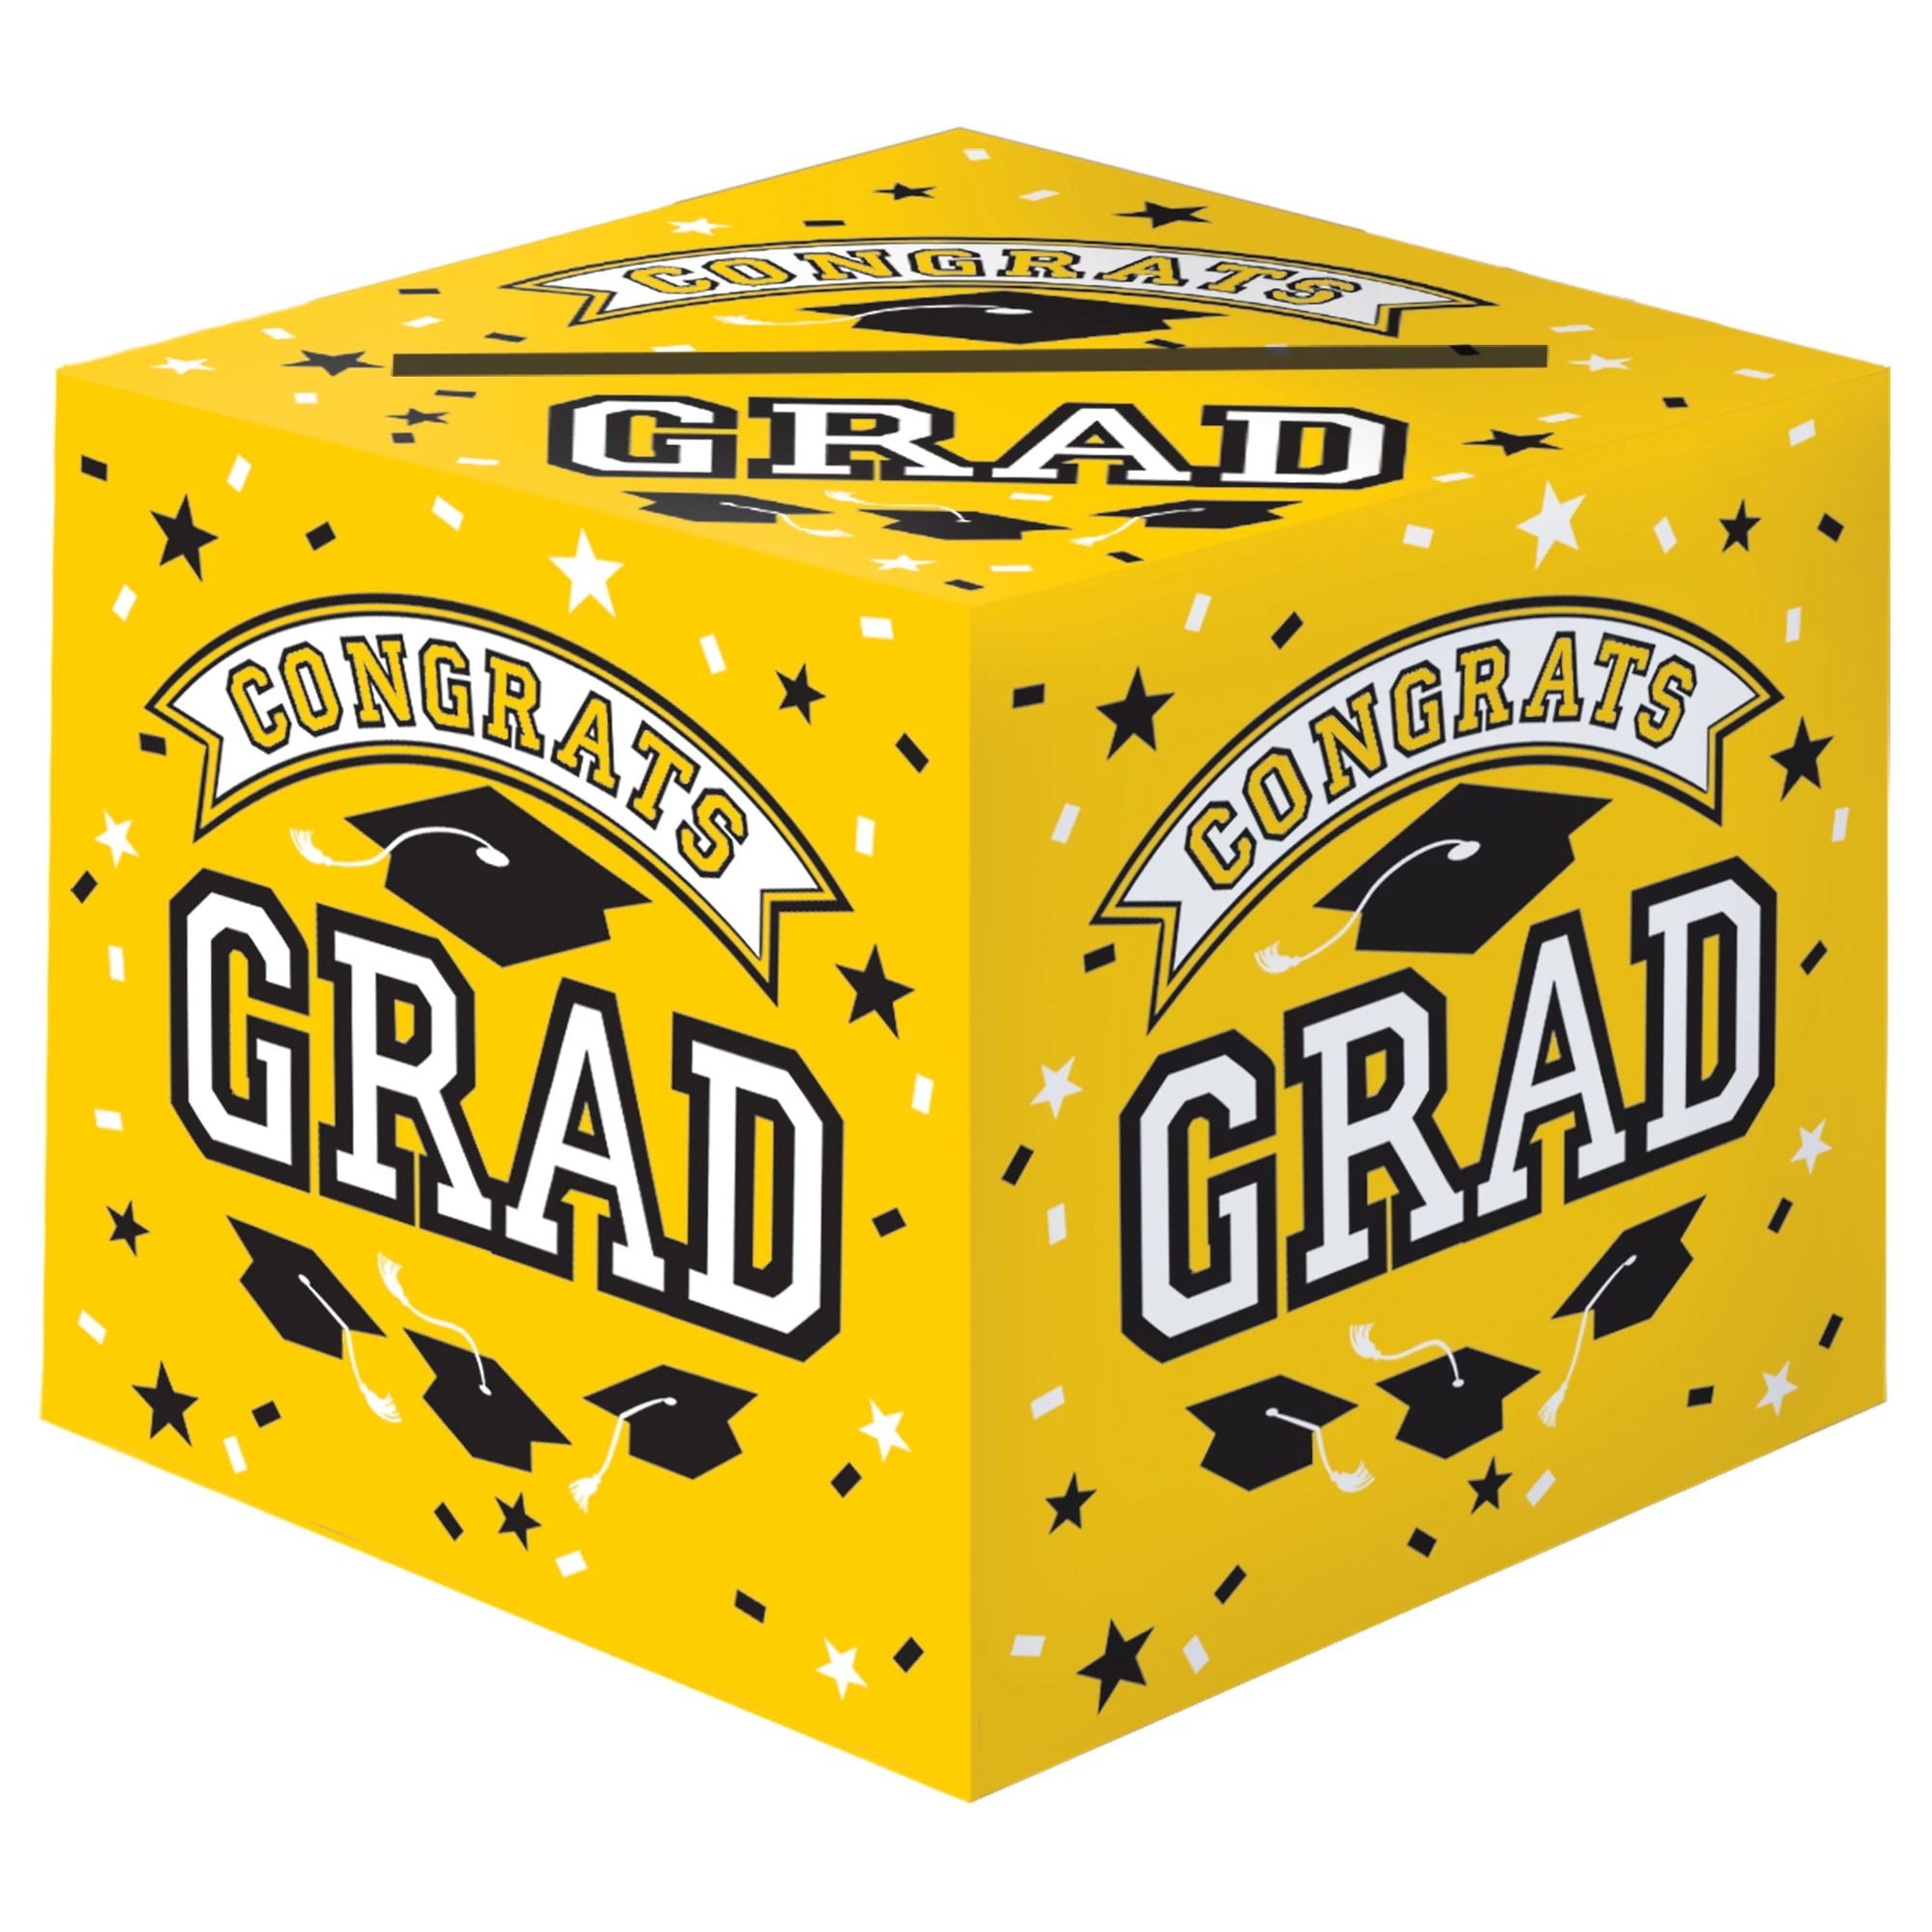 Grad Cardholder Box - Yellow